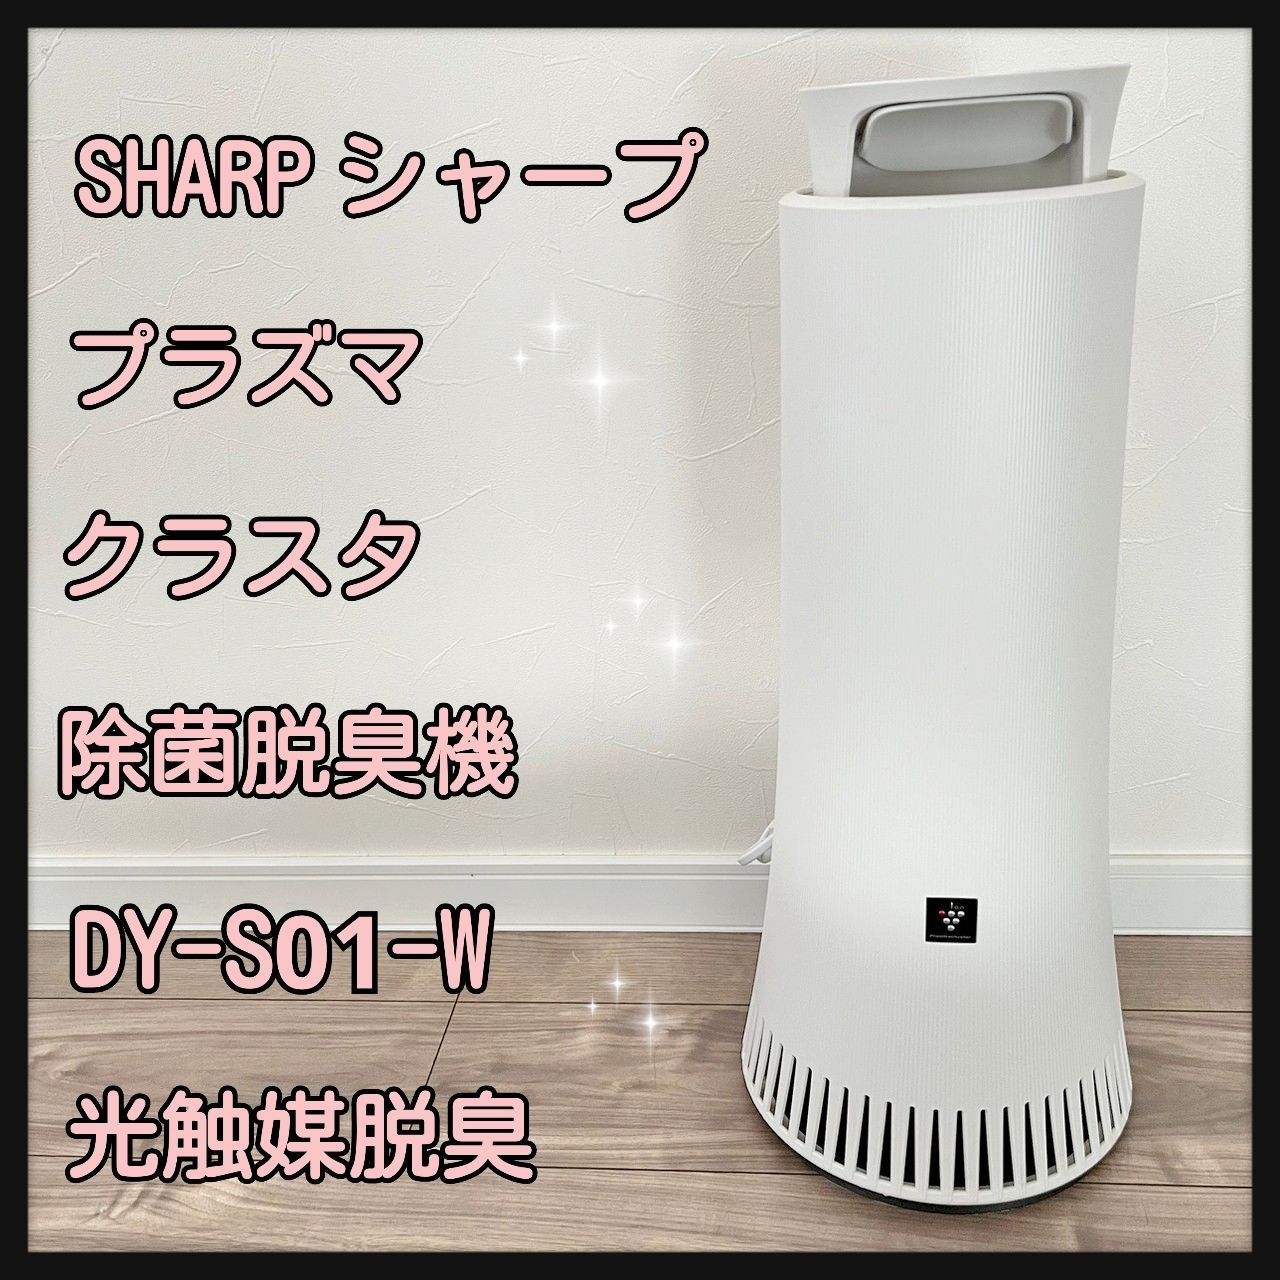 SHARP シャープ 脱臭機 DY-S01 プラズマクラスター - 空調